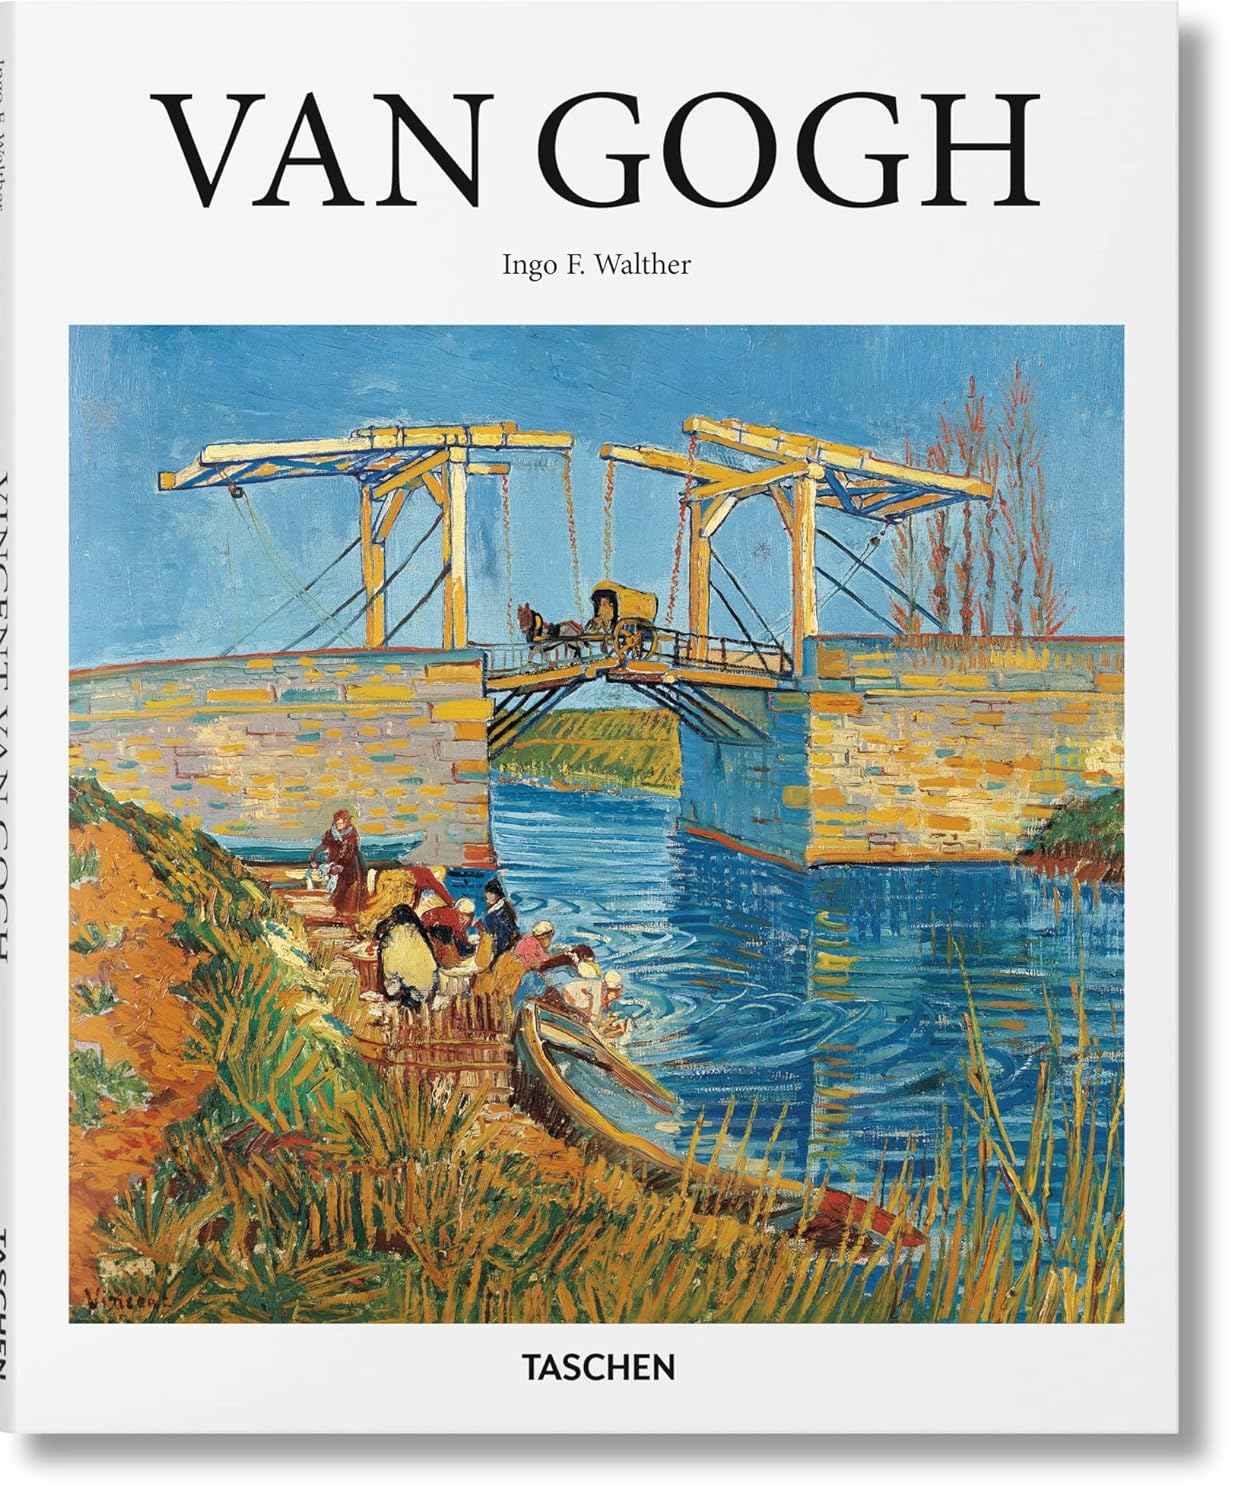 Van Gogh by Ingo